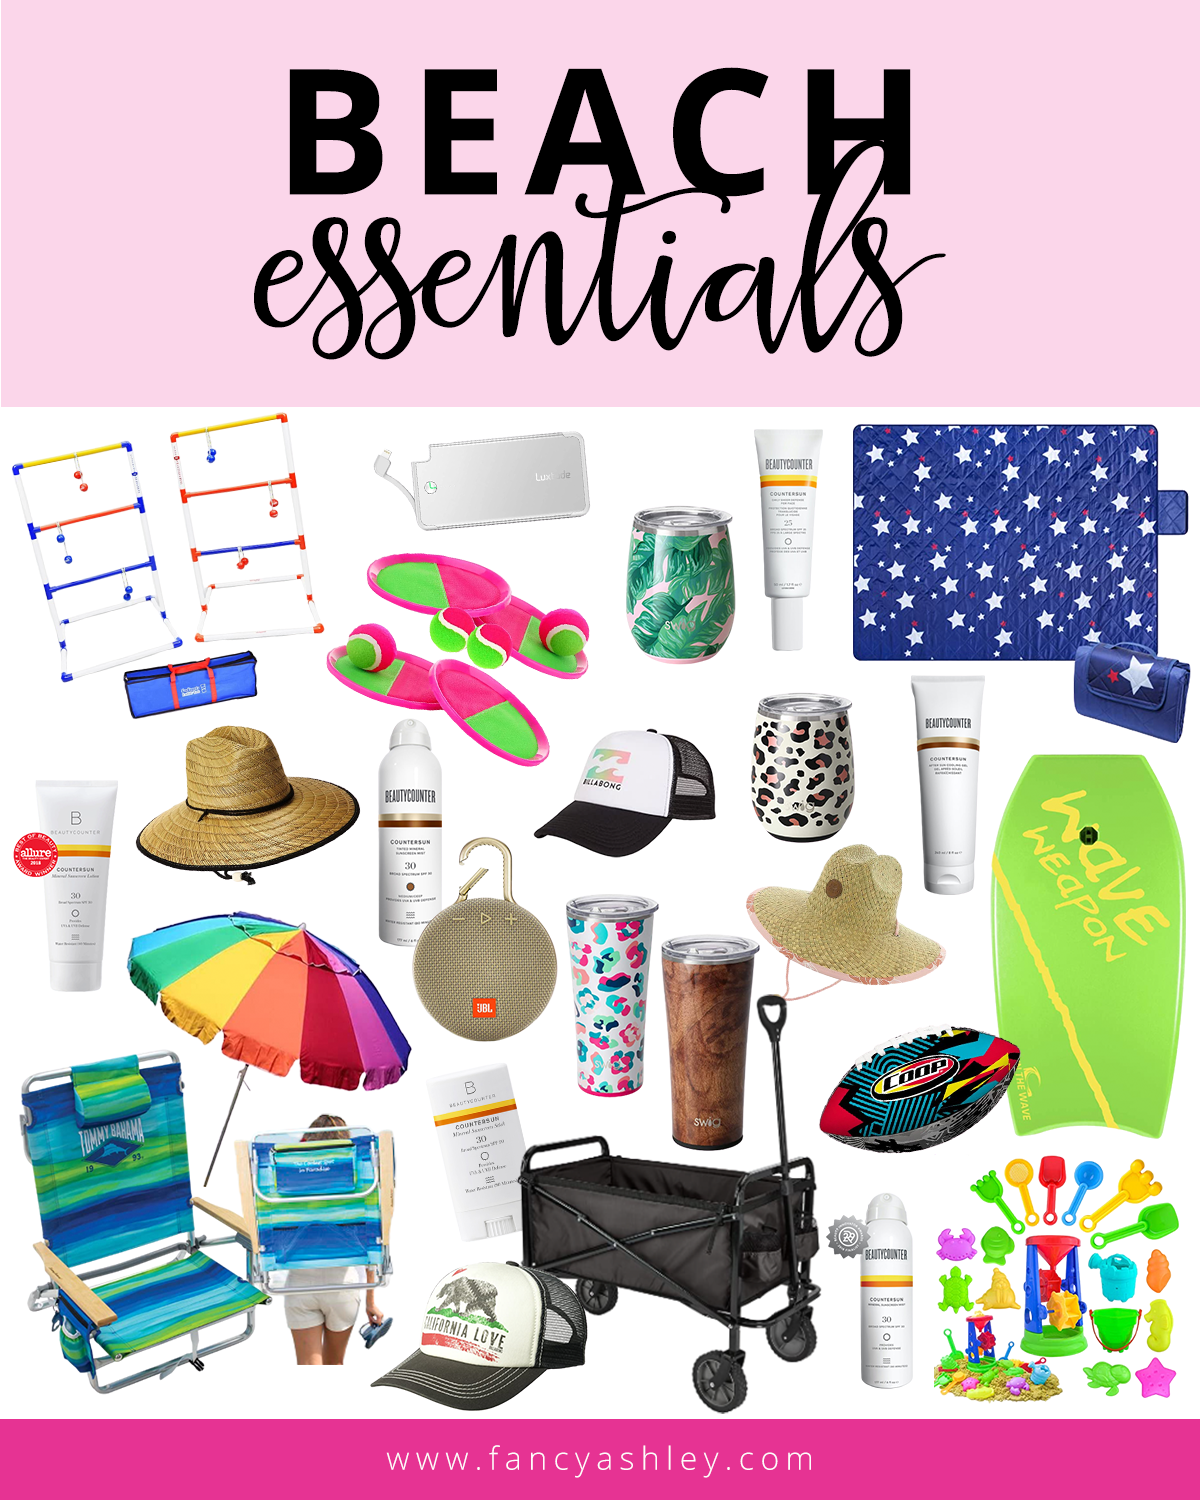 Beach Essentials - What to Bring?